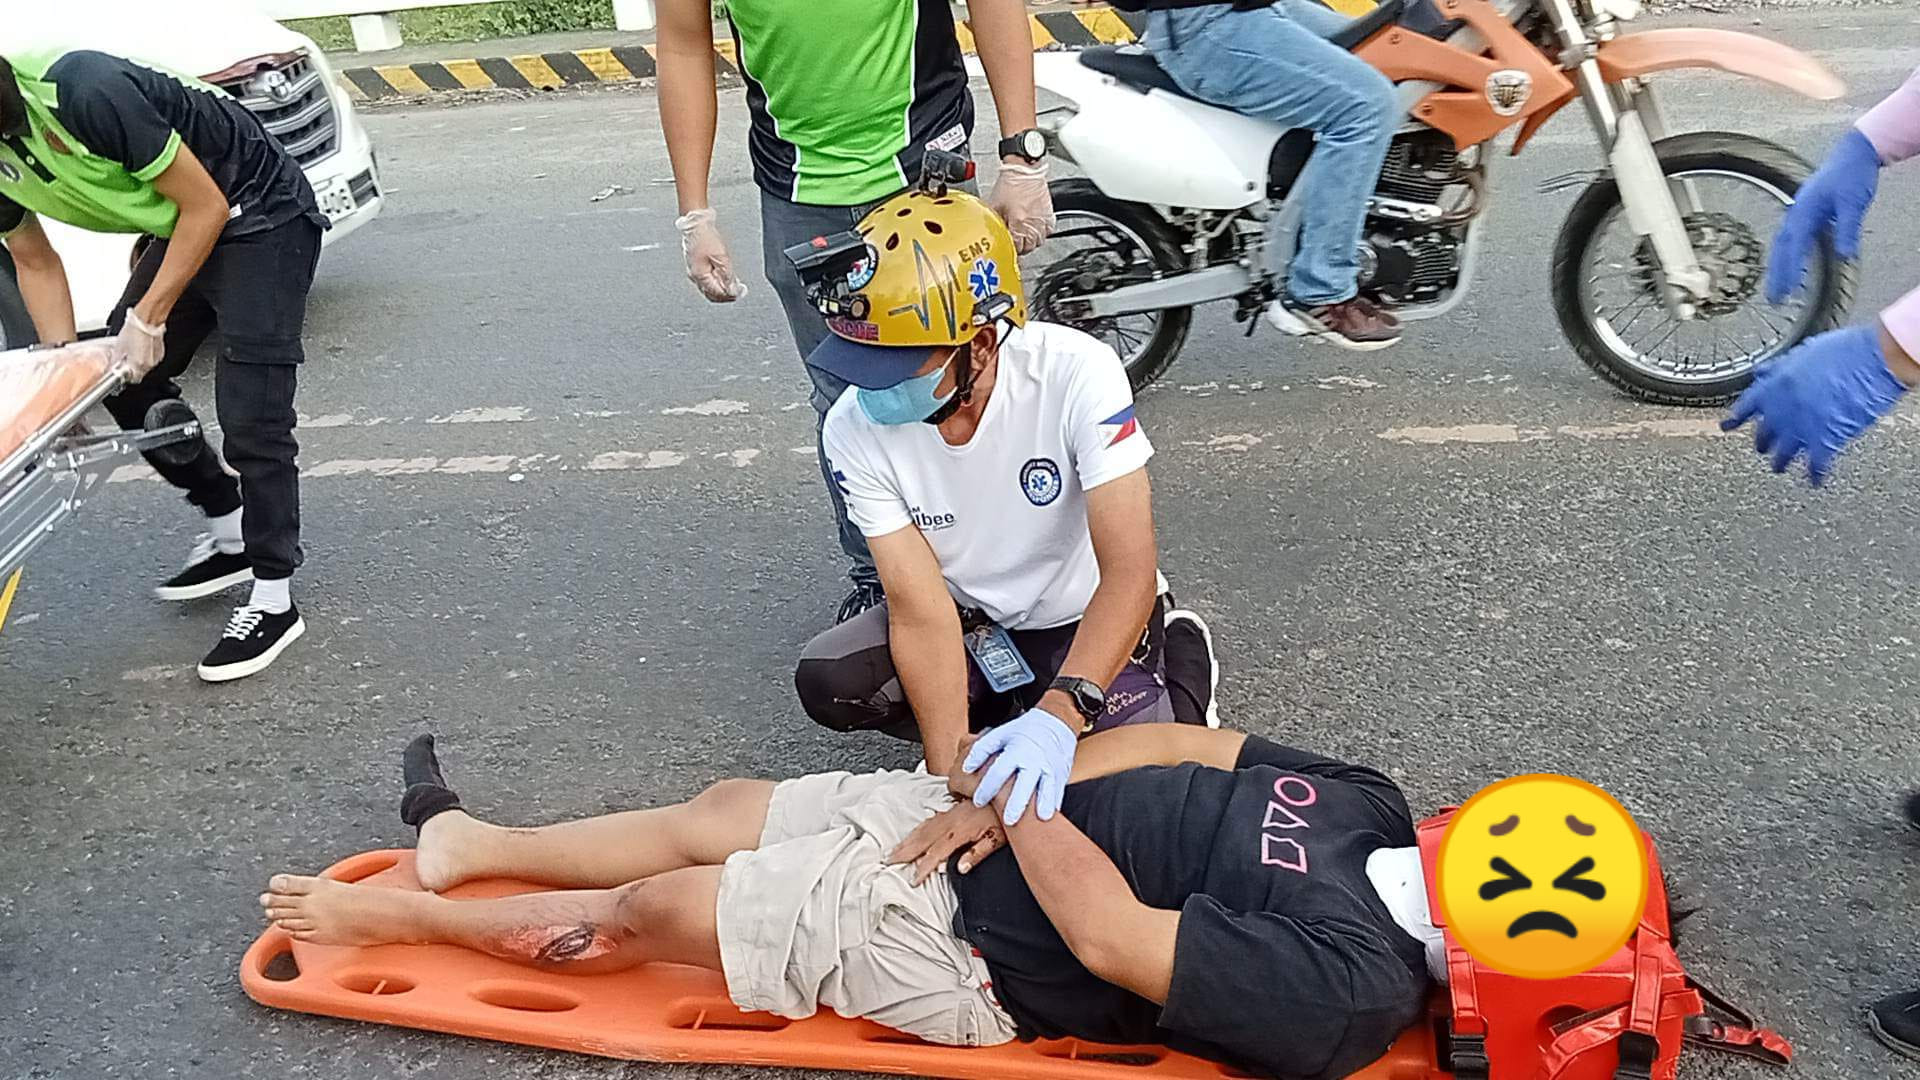 EMR Raptor volunteer responded road accident involving motorcycle along circumferential road – Mario Eleno Canoy Jr.